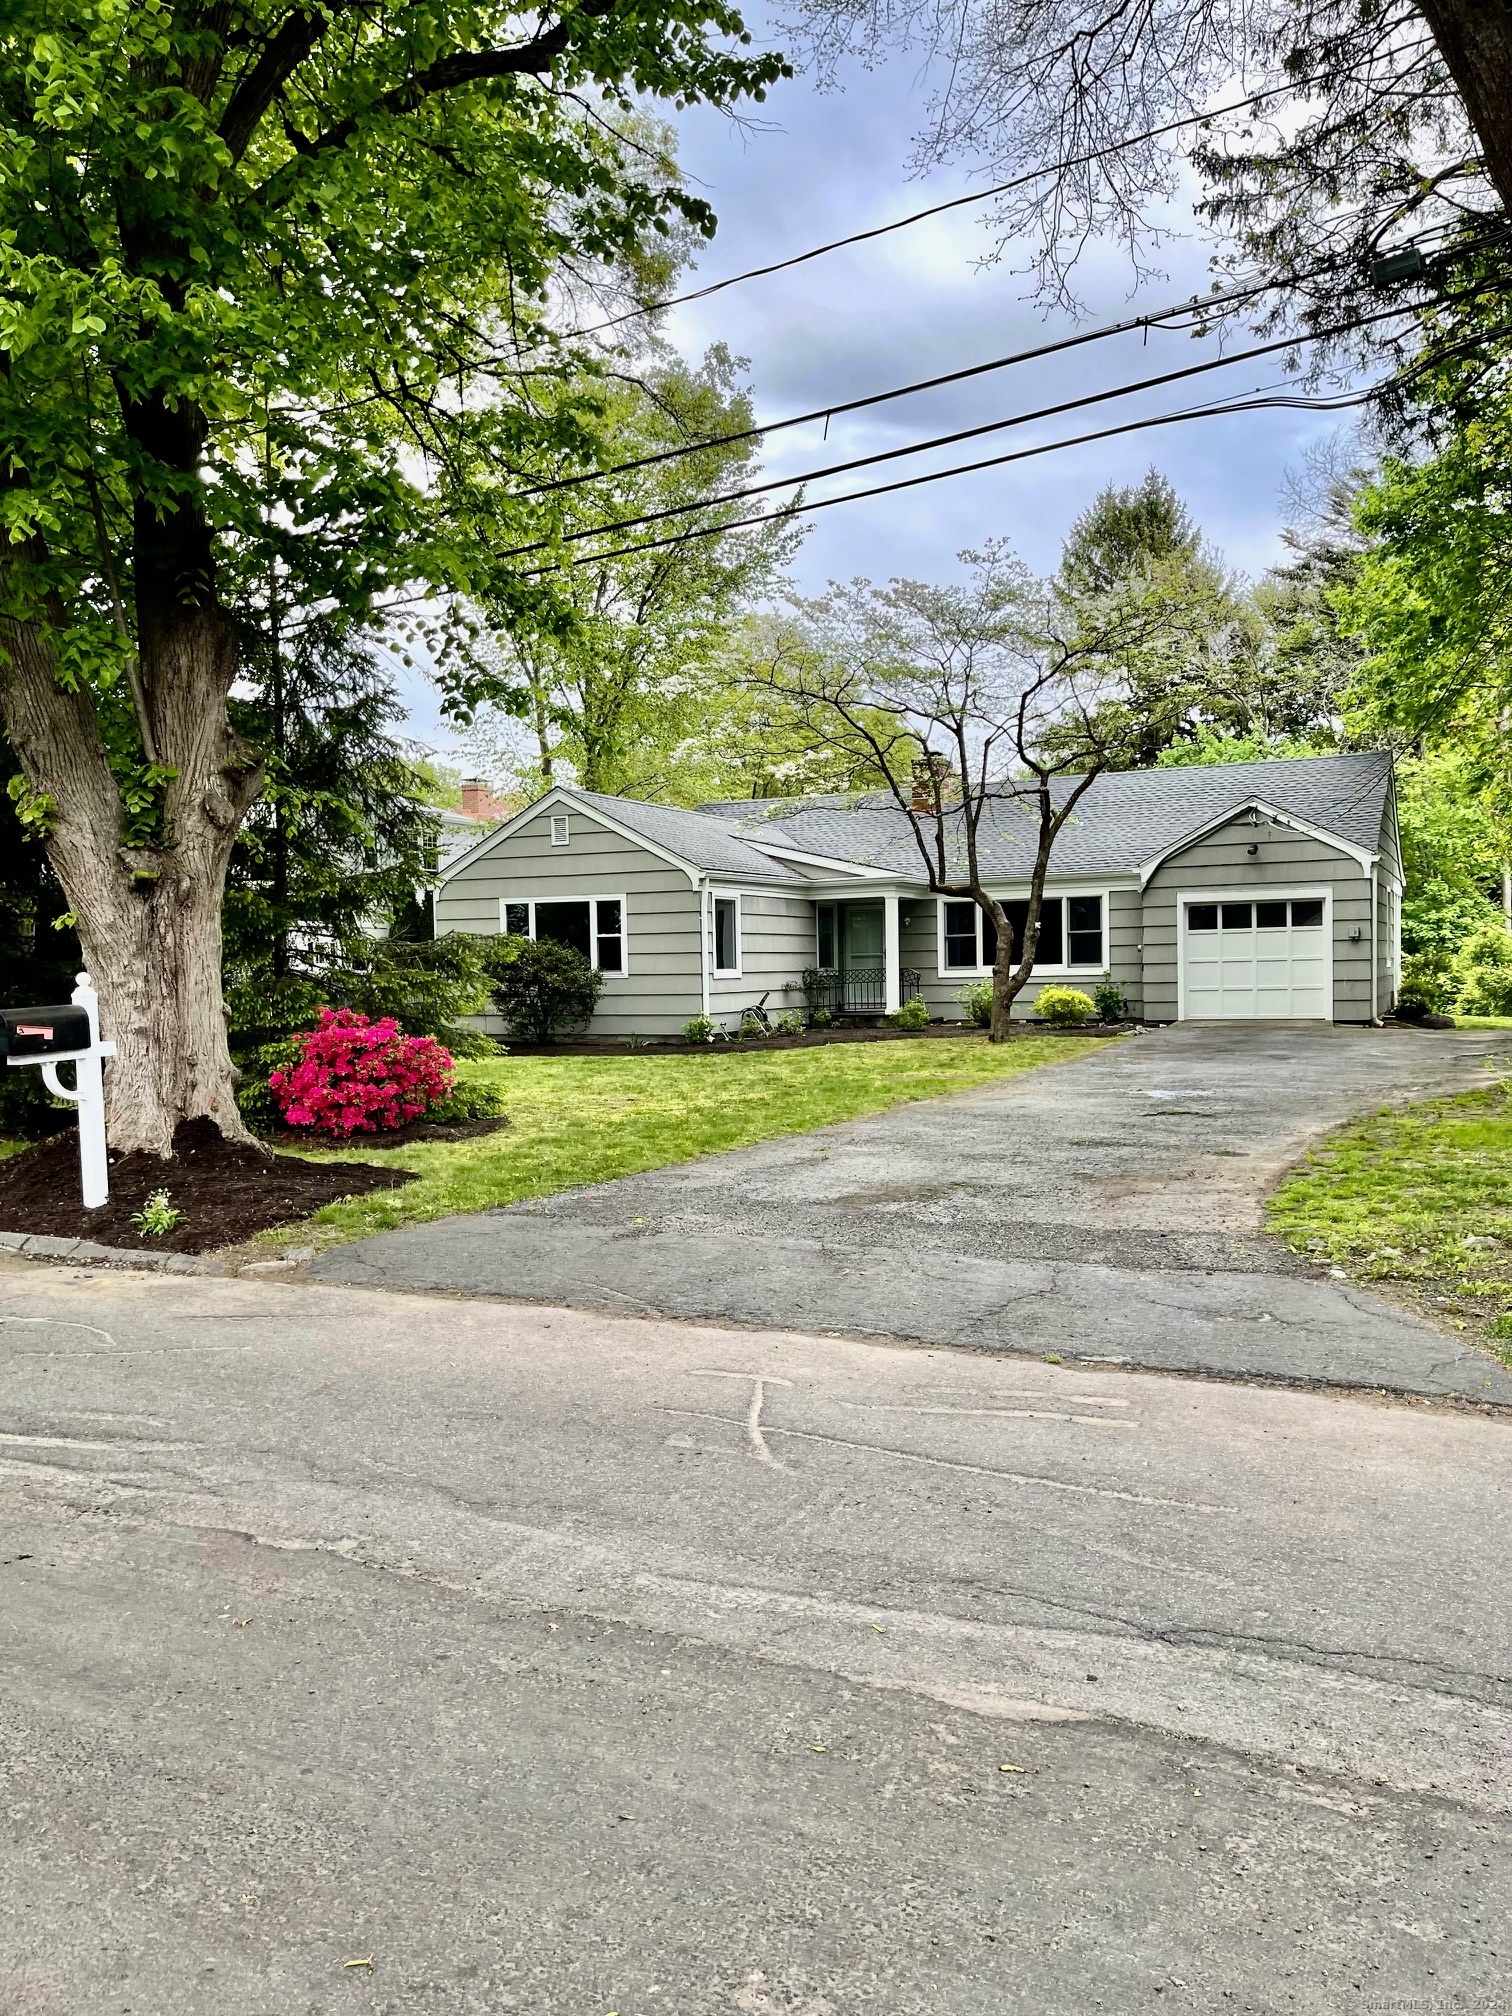 Rental Property at 4 Evergreen Parkway, Westport, Connecticut - Bedrooms: 3 
Bathrooms: 2 
Rooms: 6  - $5,800 MO.